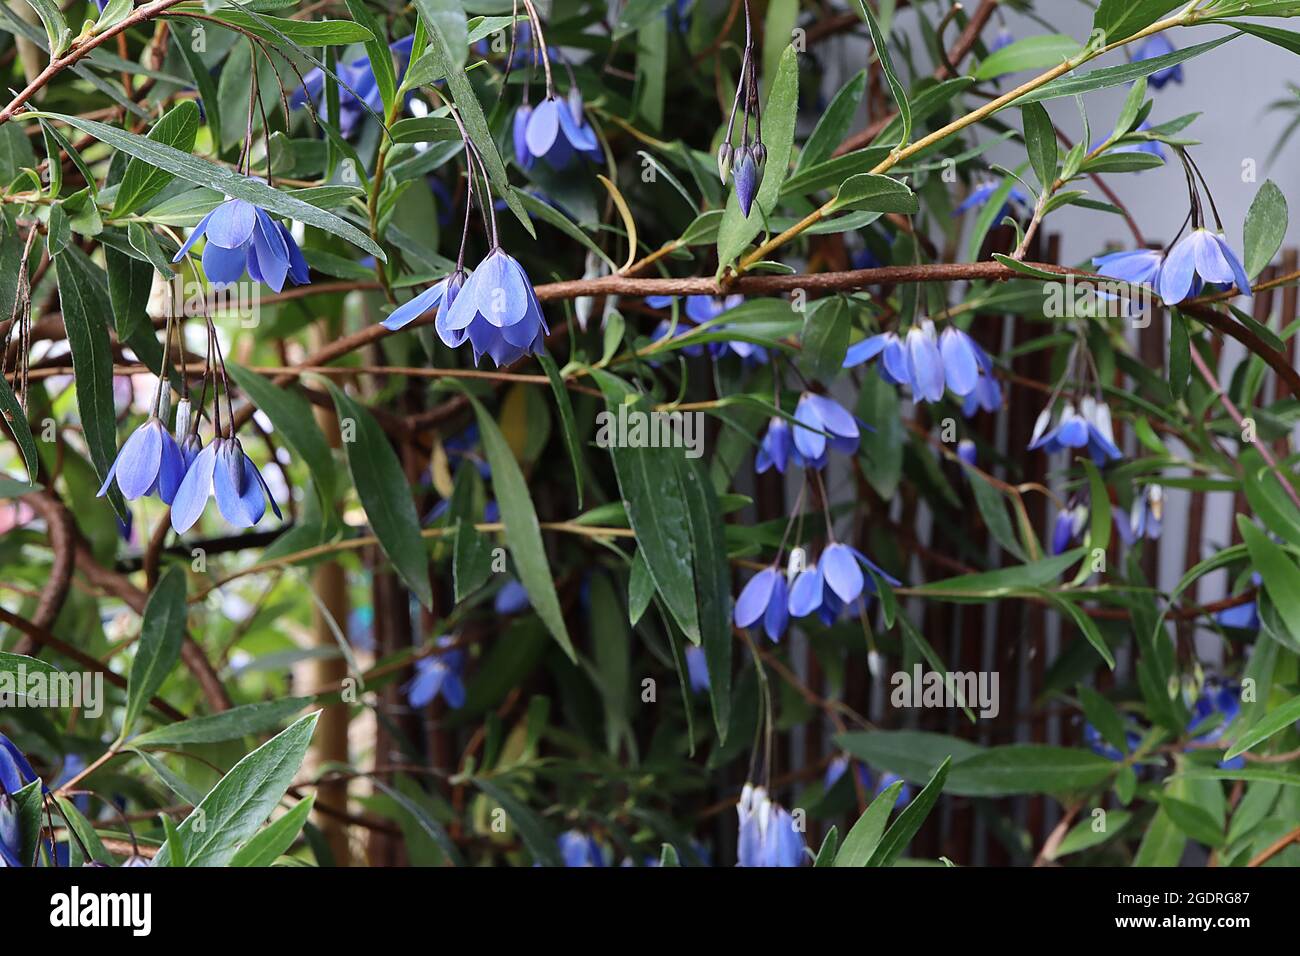 Sollya / Blardiera heterophylla bluebell rampante – grappes pendantes de fleurs en forme de cloche bleu vif, juillet, Angleterre, Royaume-Uni Banque D'Images